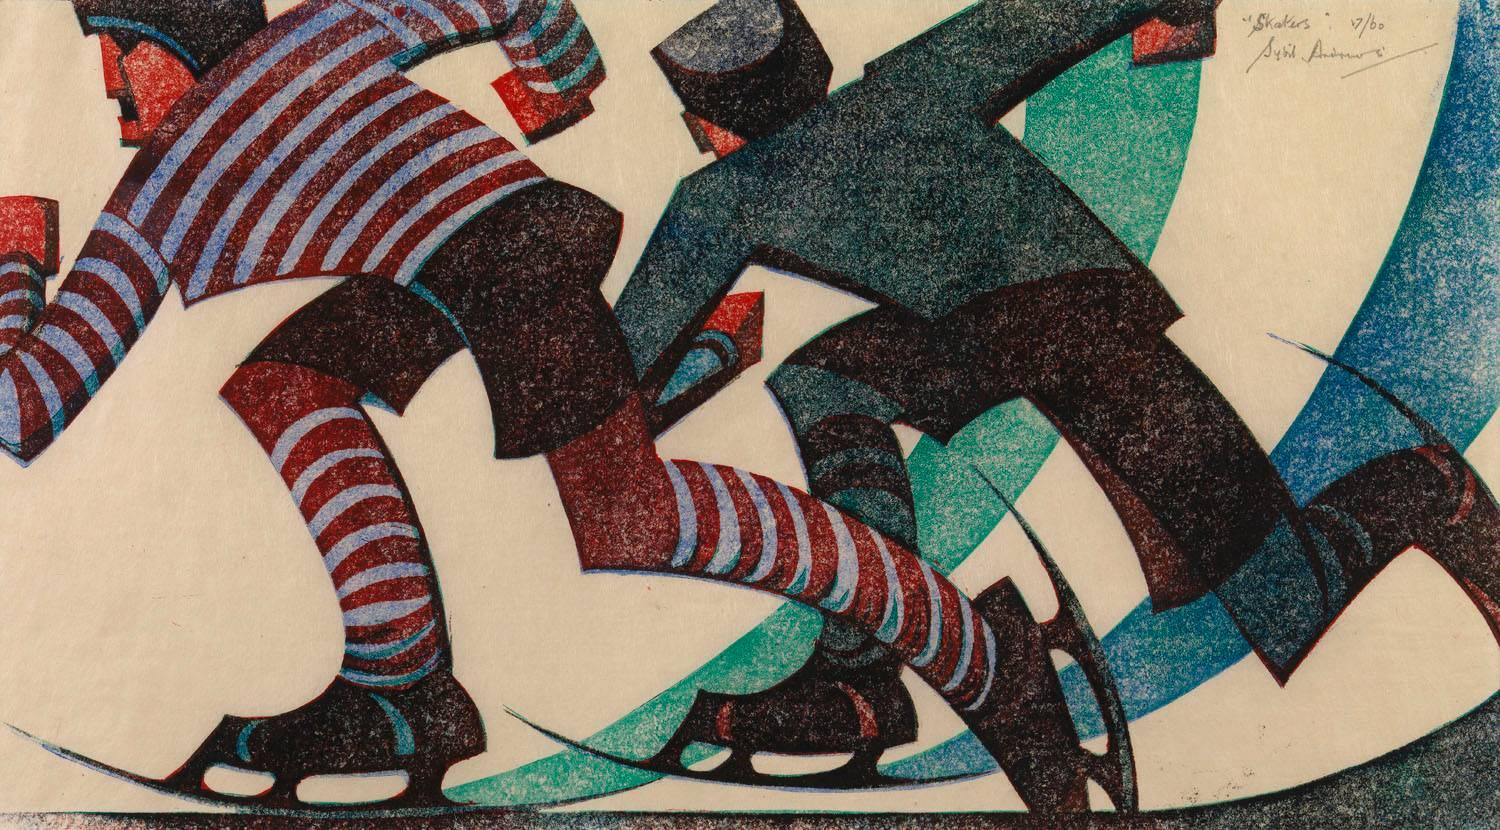 Sybil Andrews Figurative Print - Skaters